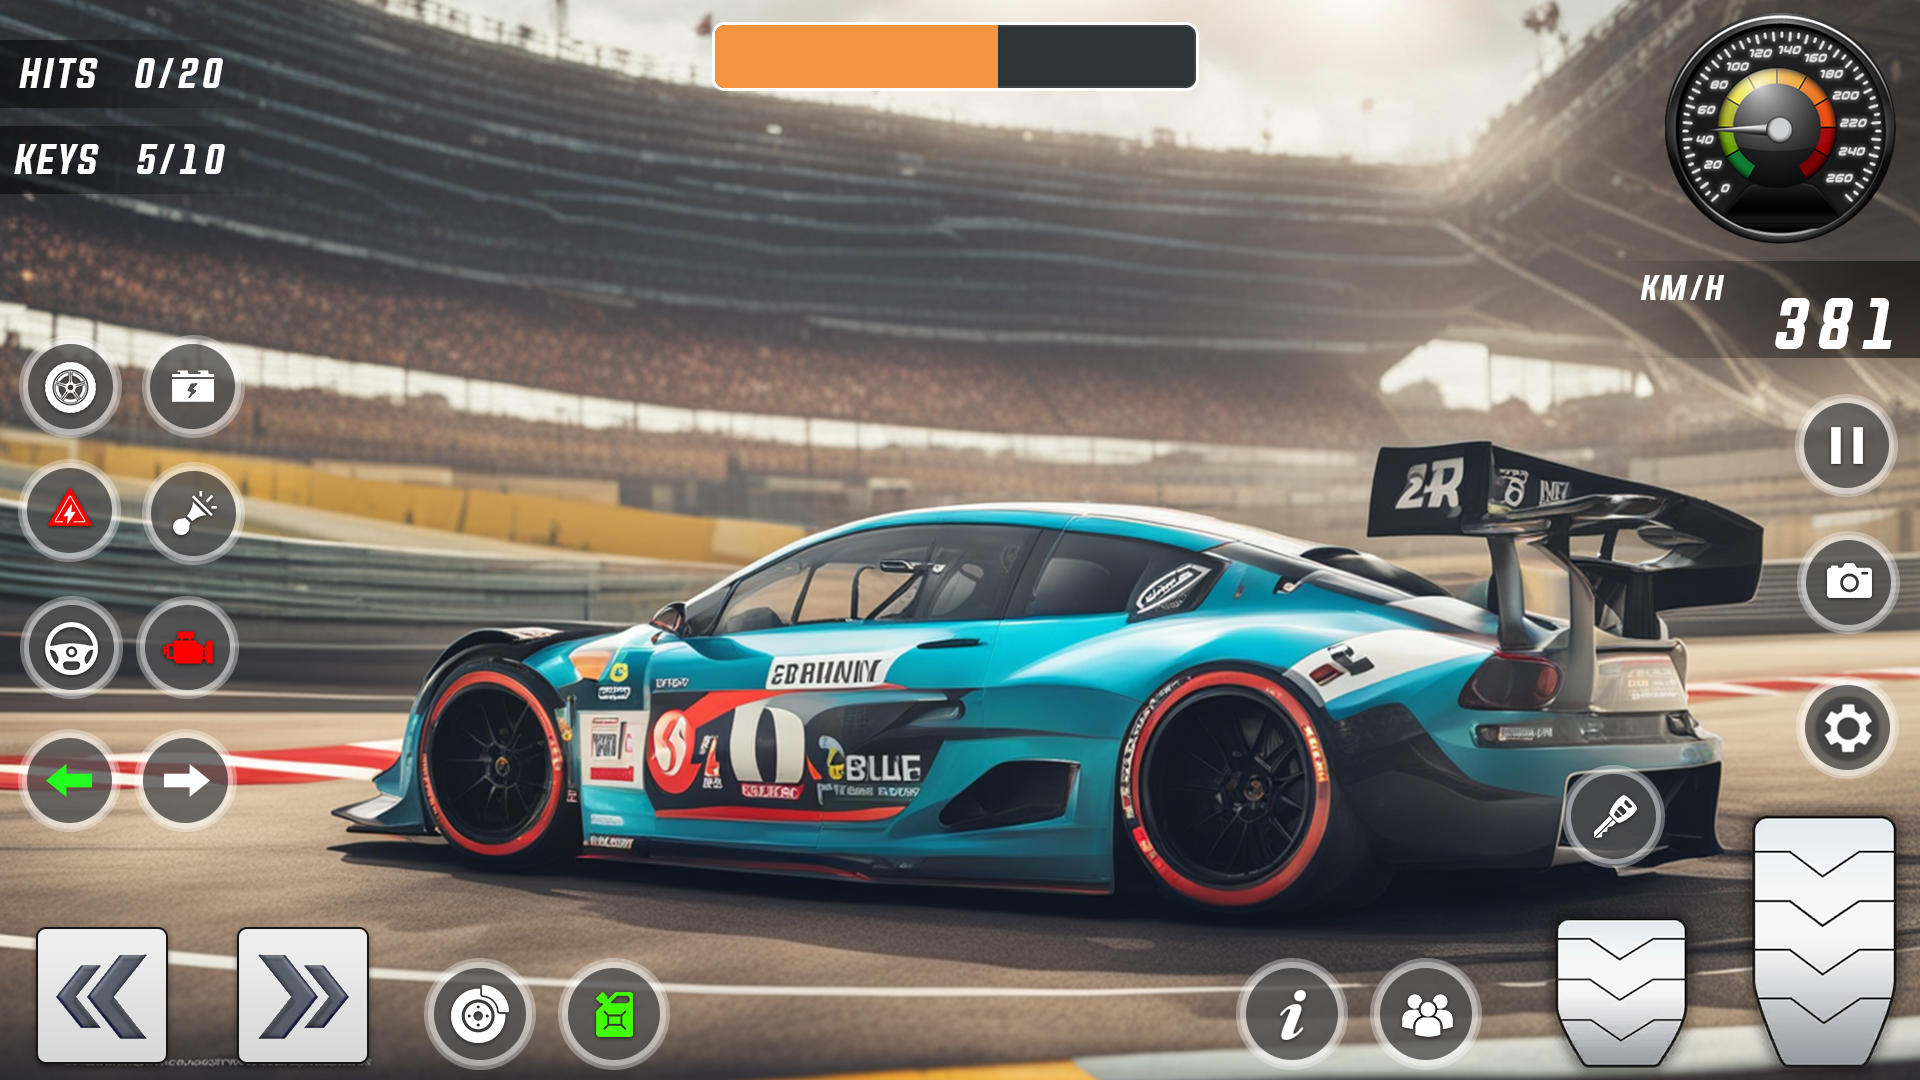 Offline Car Drift Games 3D APK for Android Download